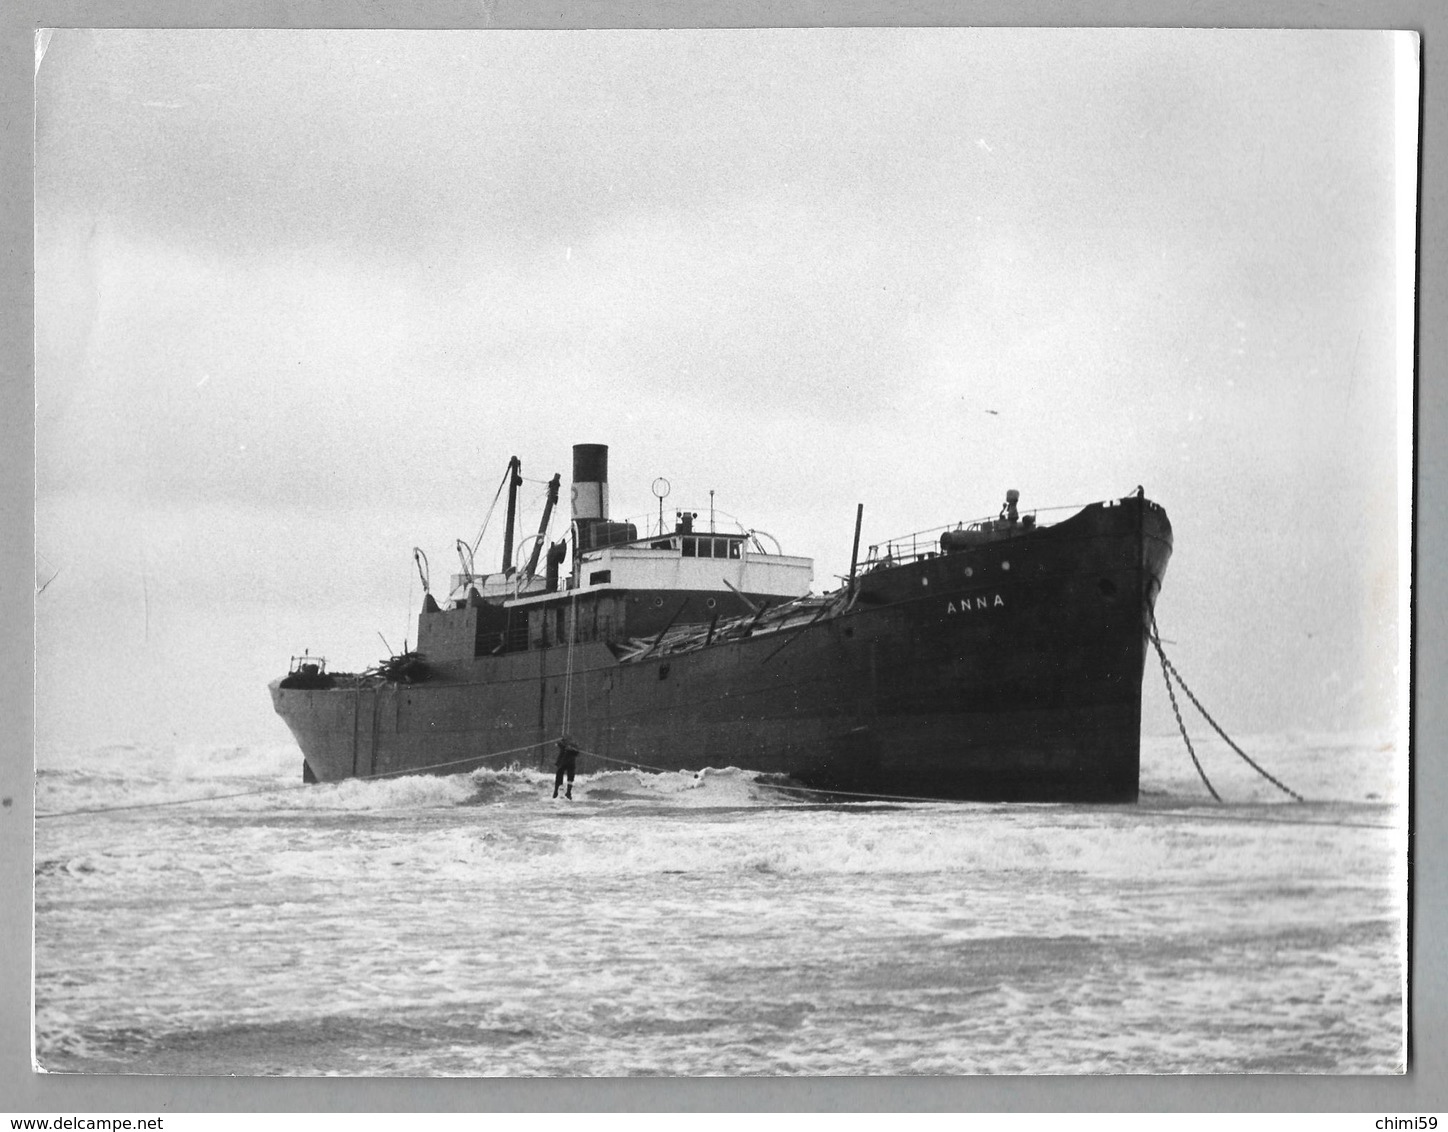 PHOTO PRESS 1959 -  FREIGHTER ANNA -CM.  24X19  Bateau  Barco  Bateaux Nave Ship Boat Cargo - Barche